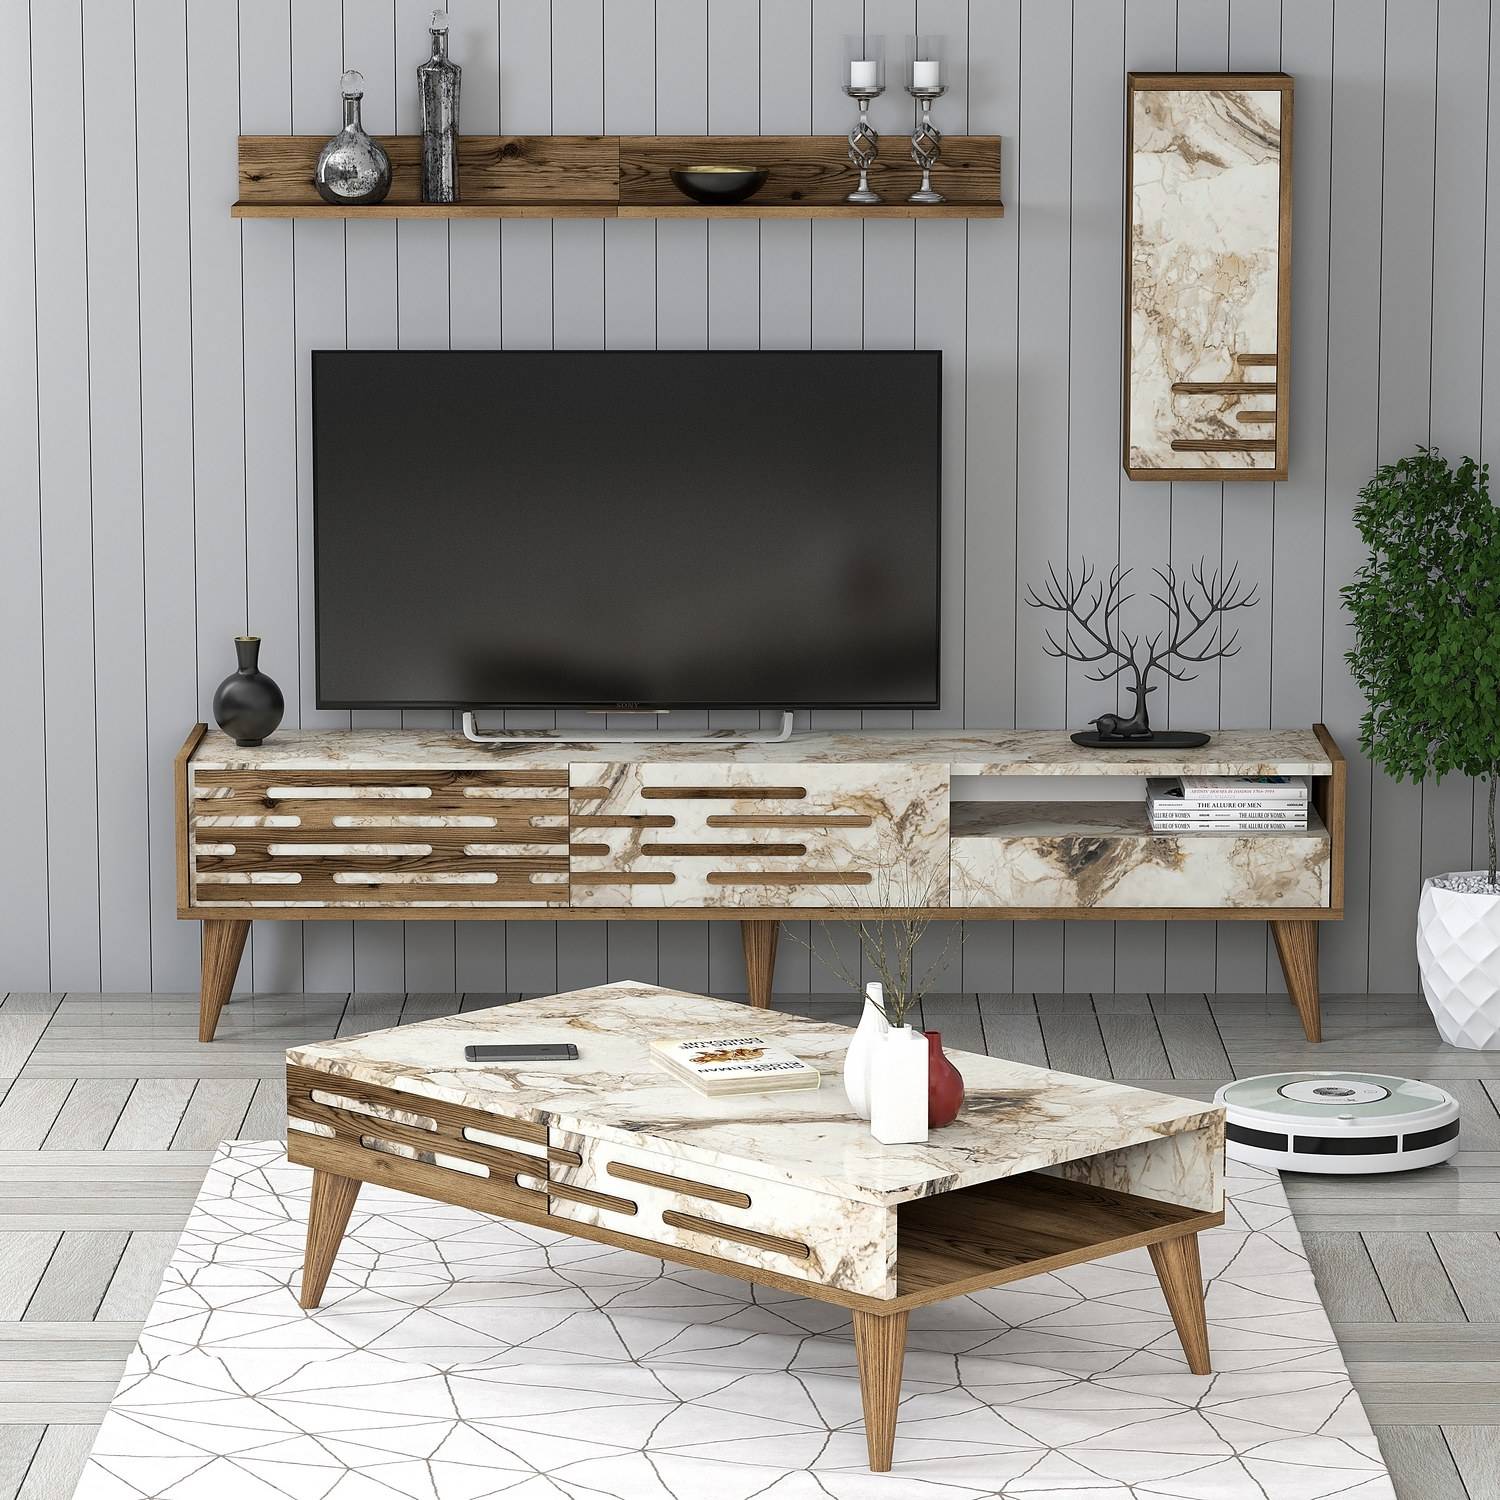 Oviva woonkamer meubelset in donker hout en wit marmereffect